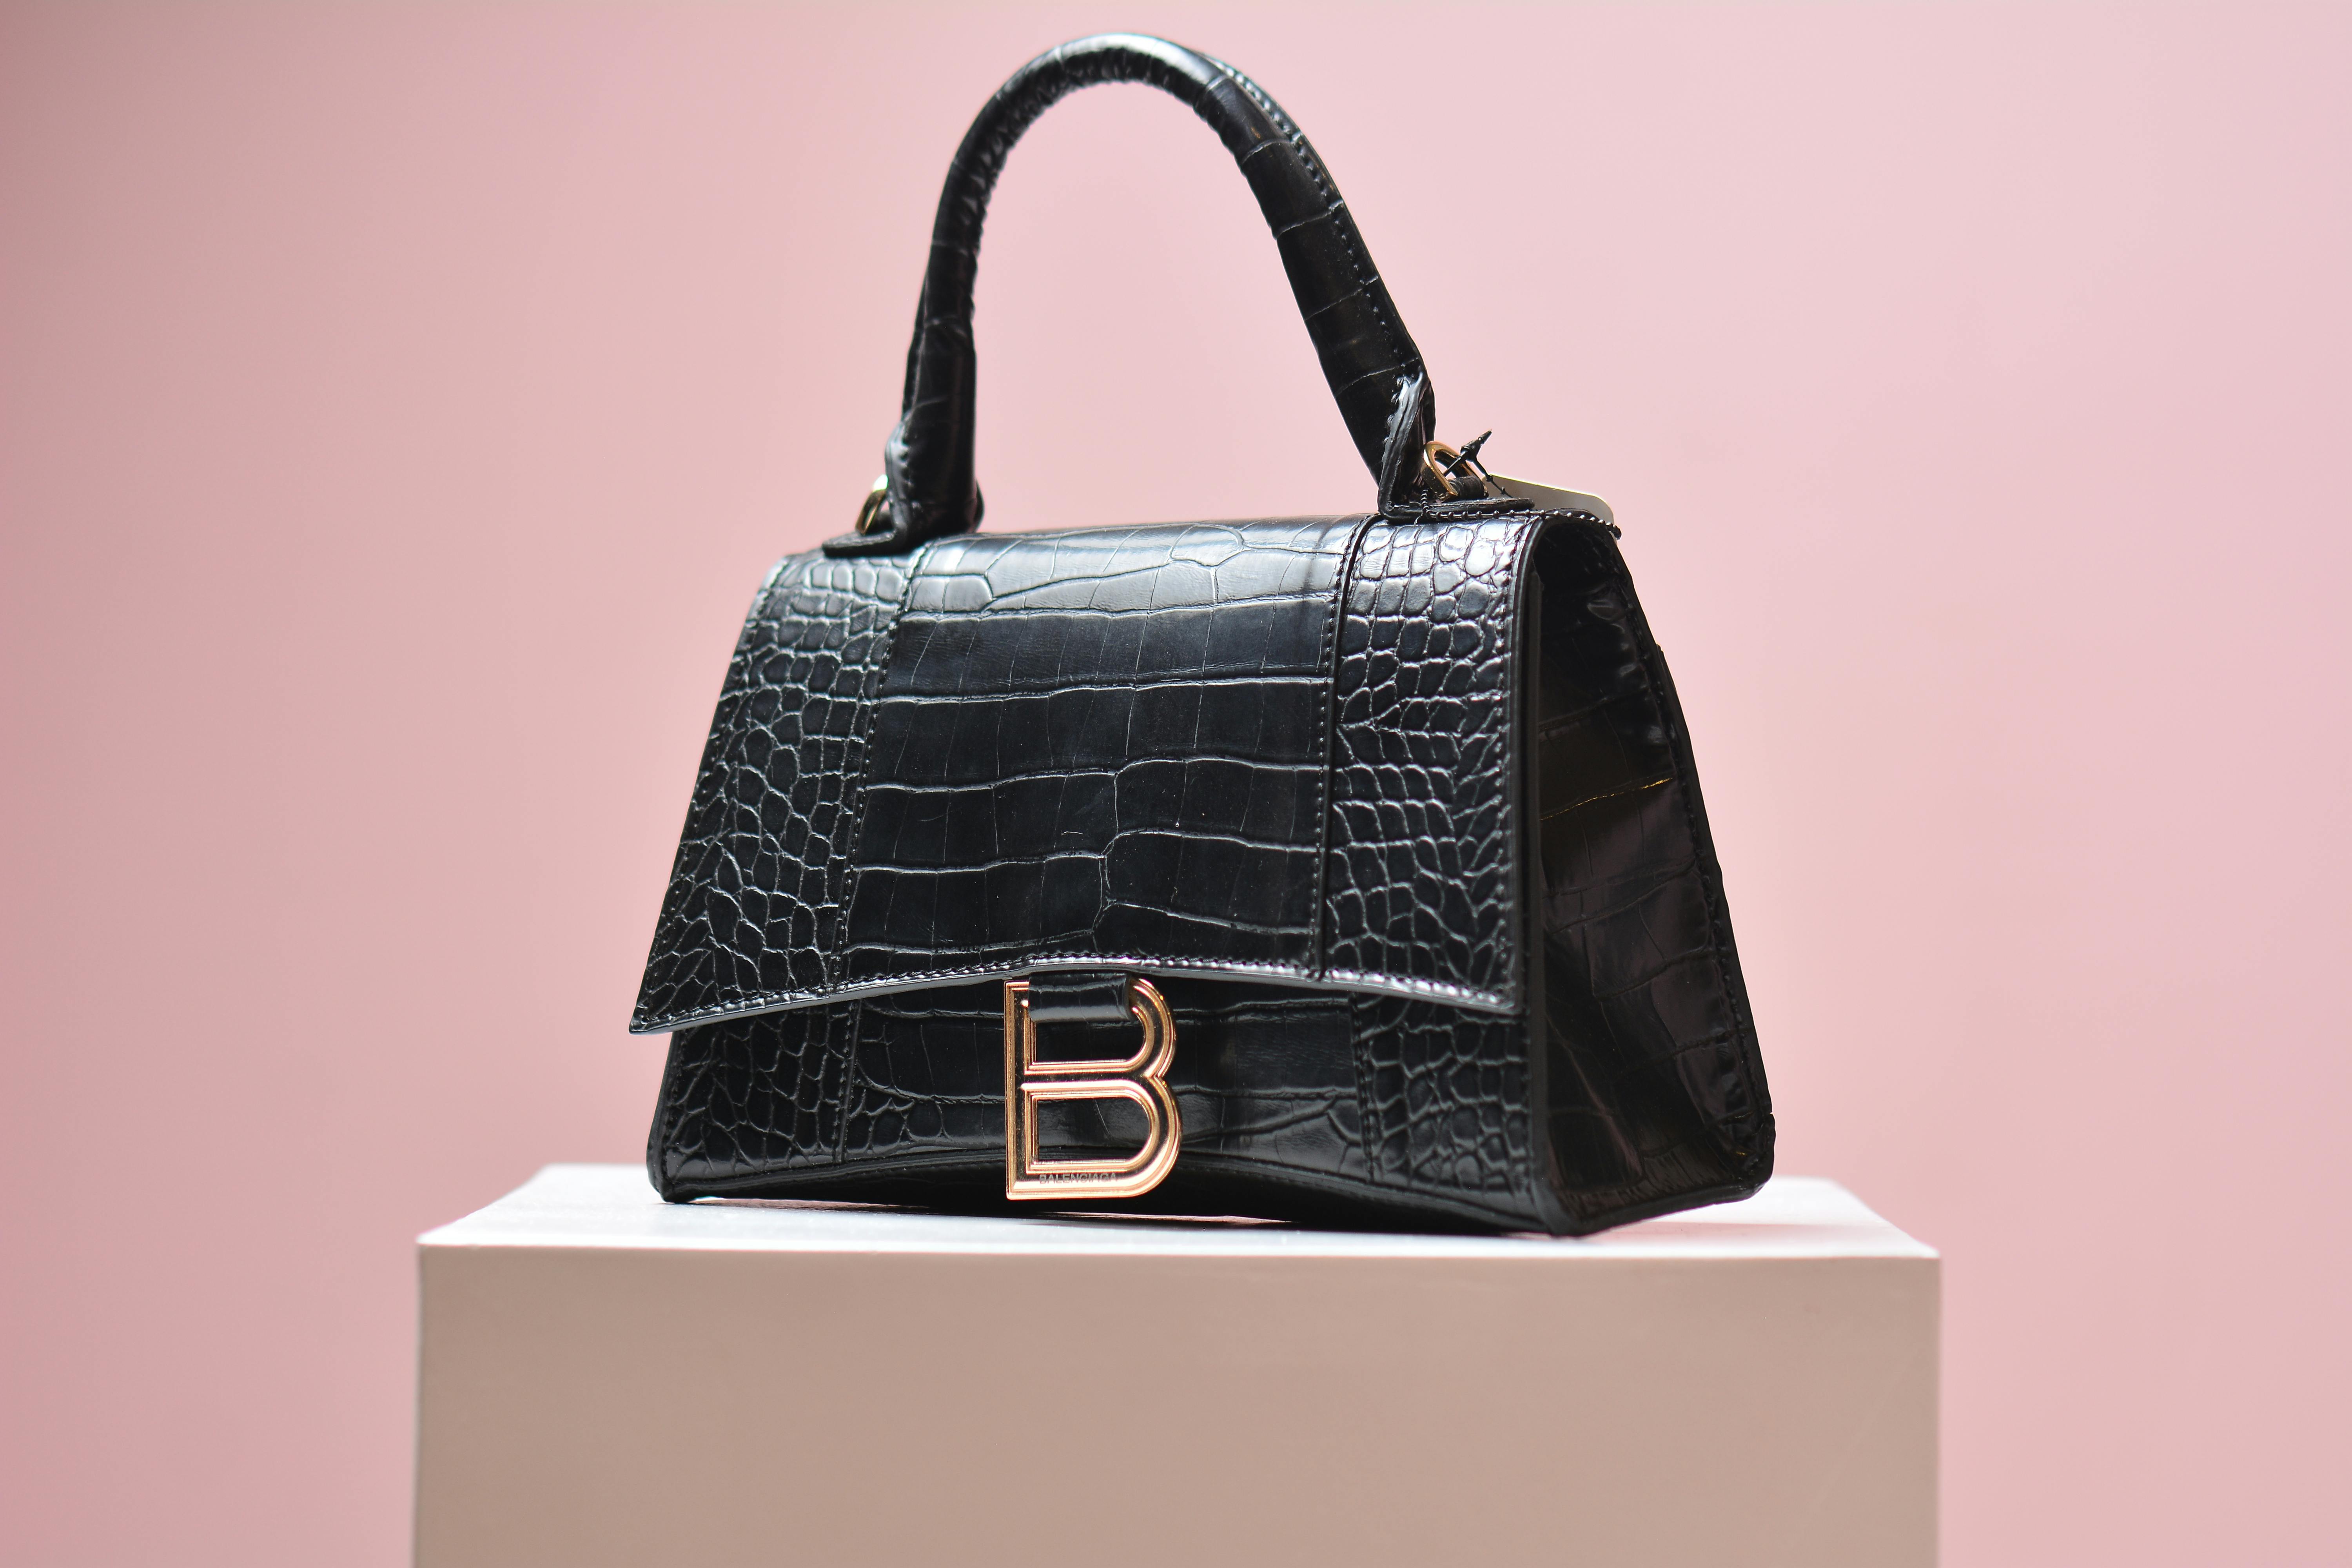 Brown Louis Vuitton Monogram Leather Handbag · Free Stock Photo